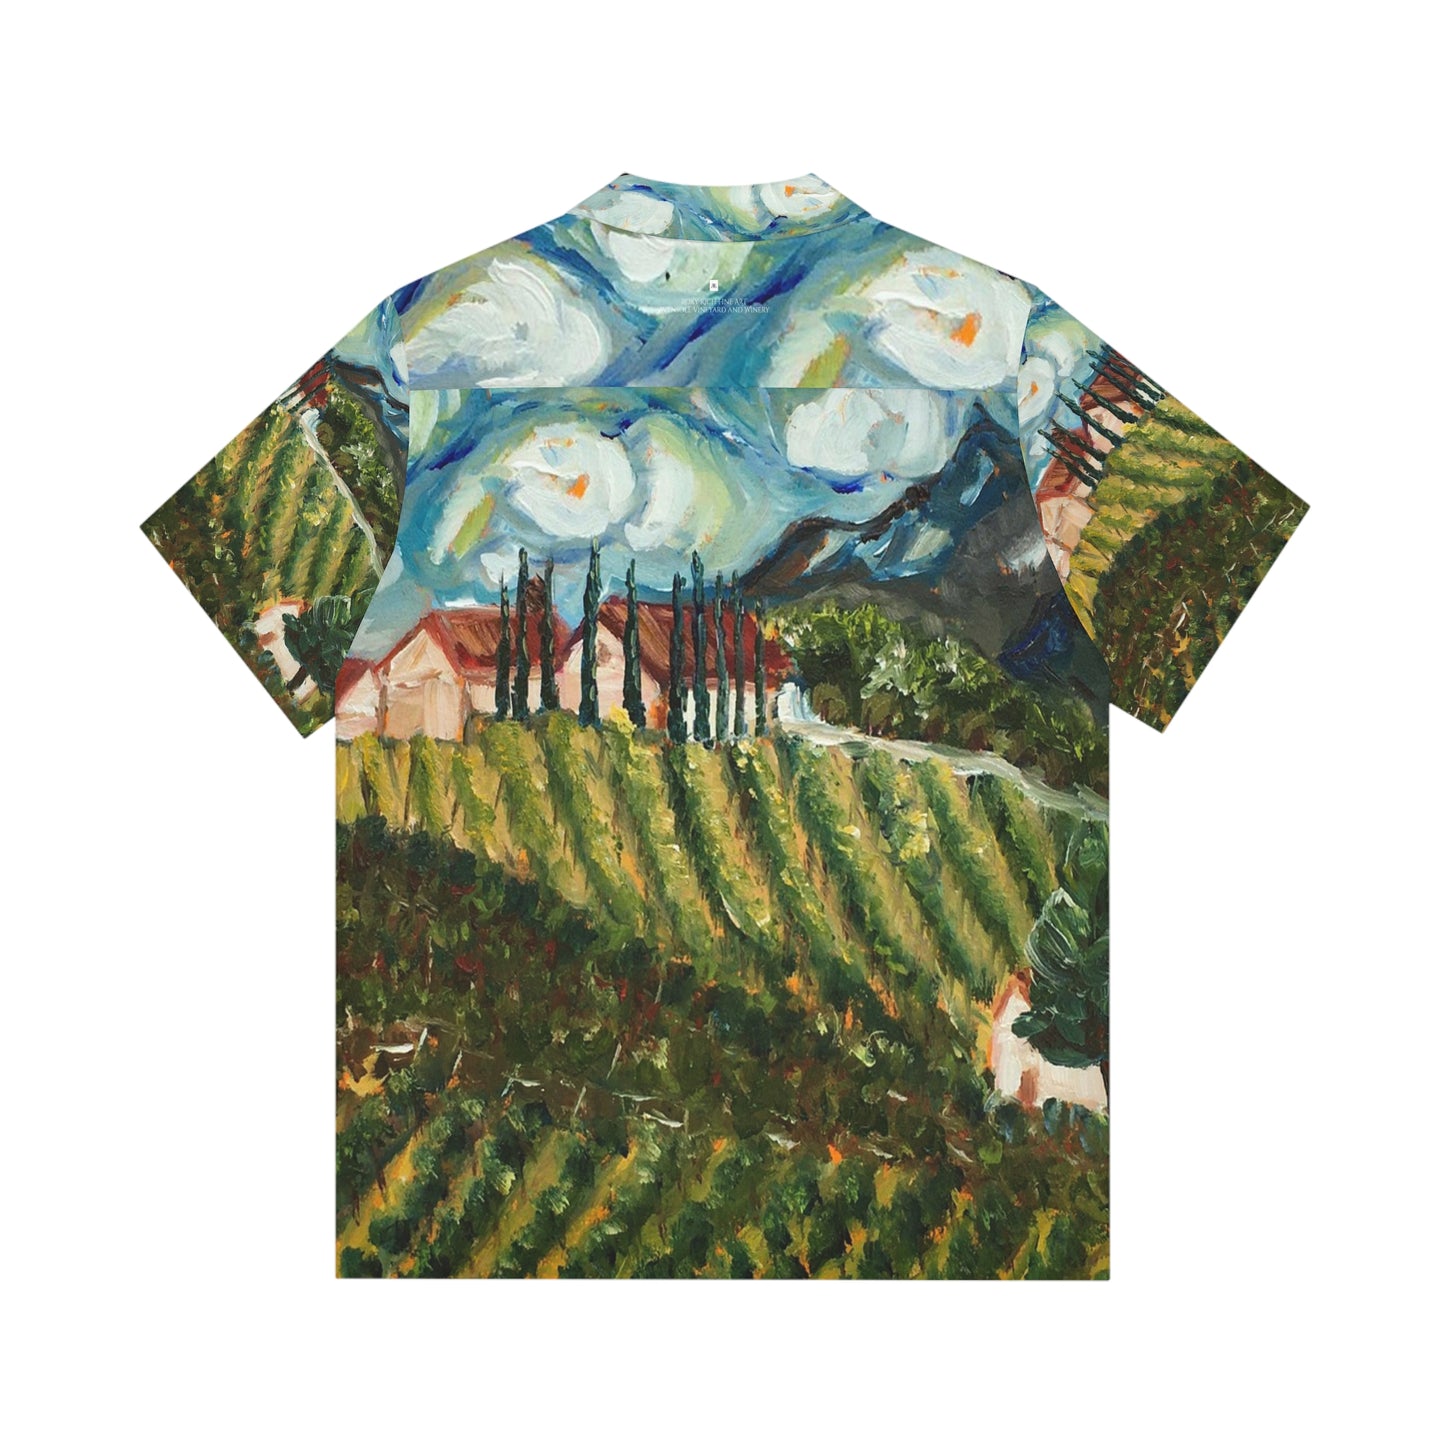 Avensole Vineyard and Winery Temecula Men's Hawaiian Shirt